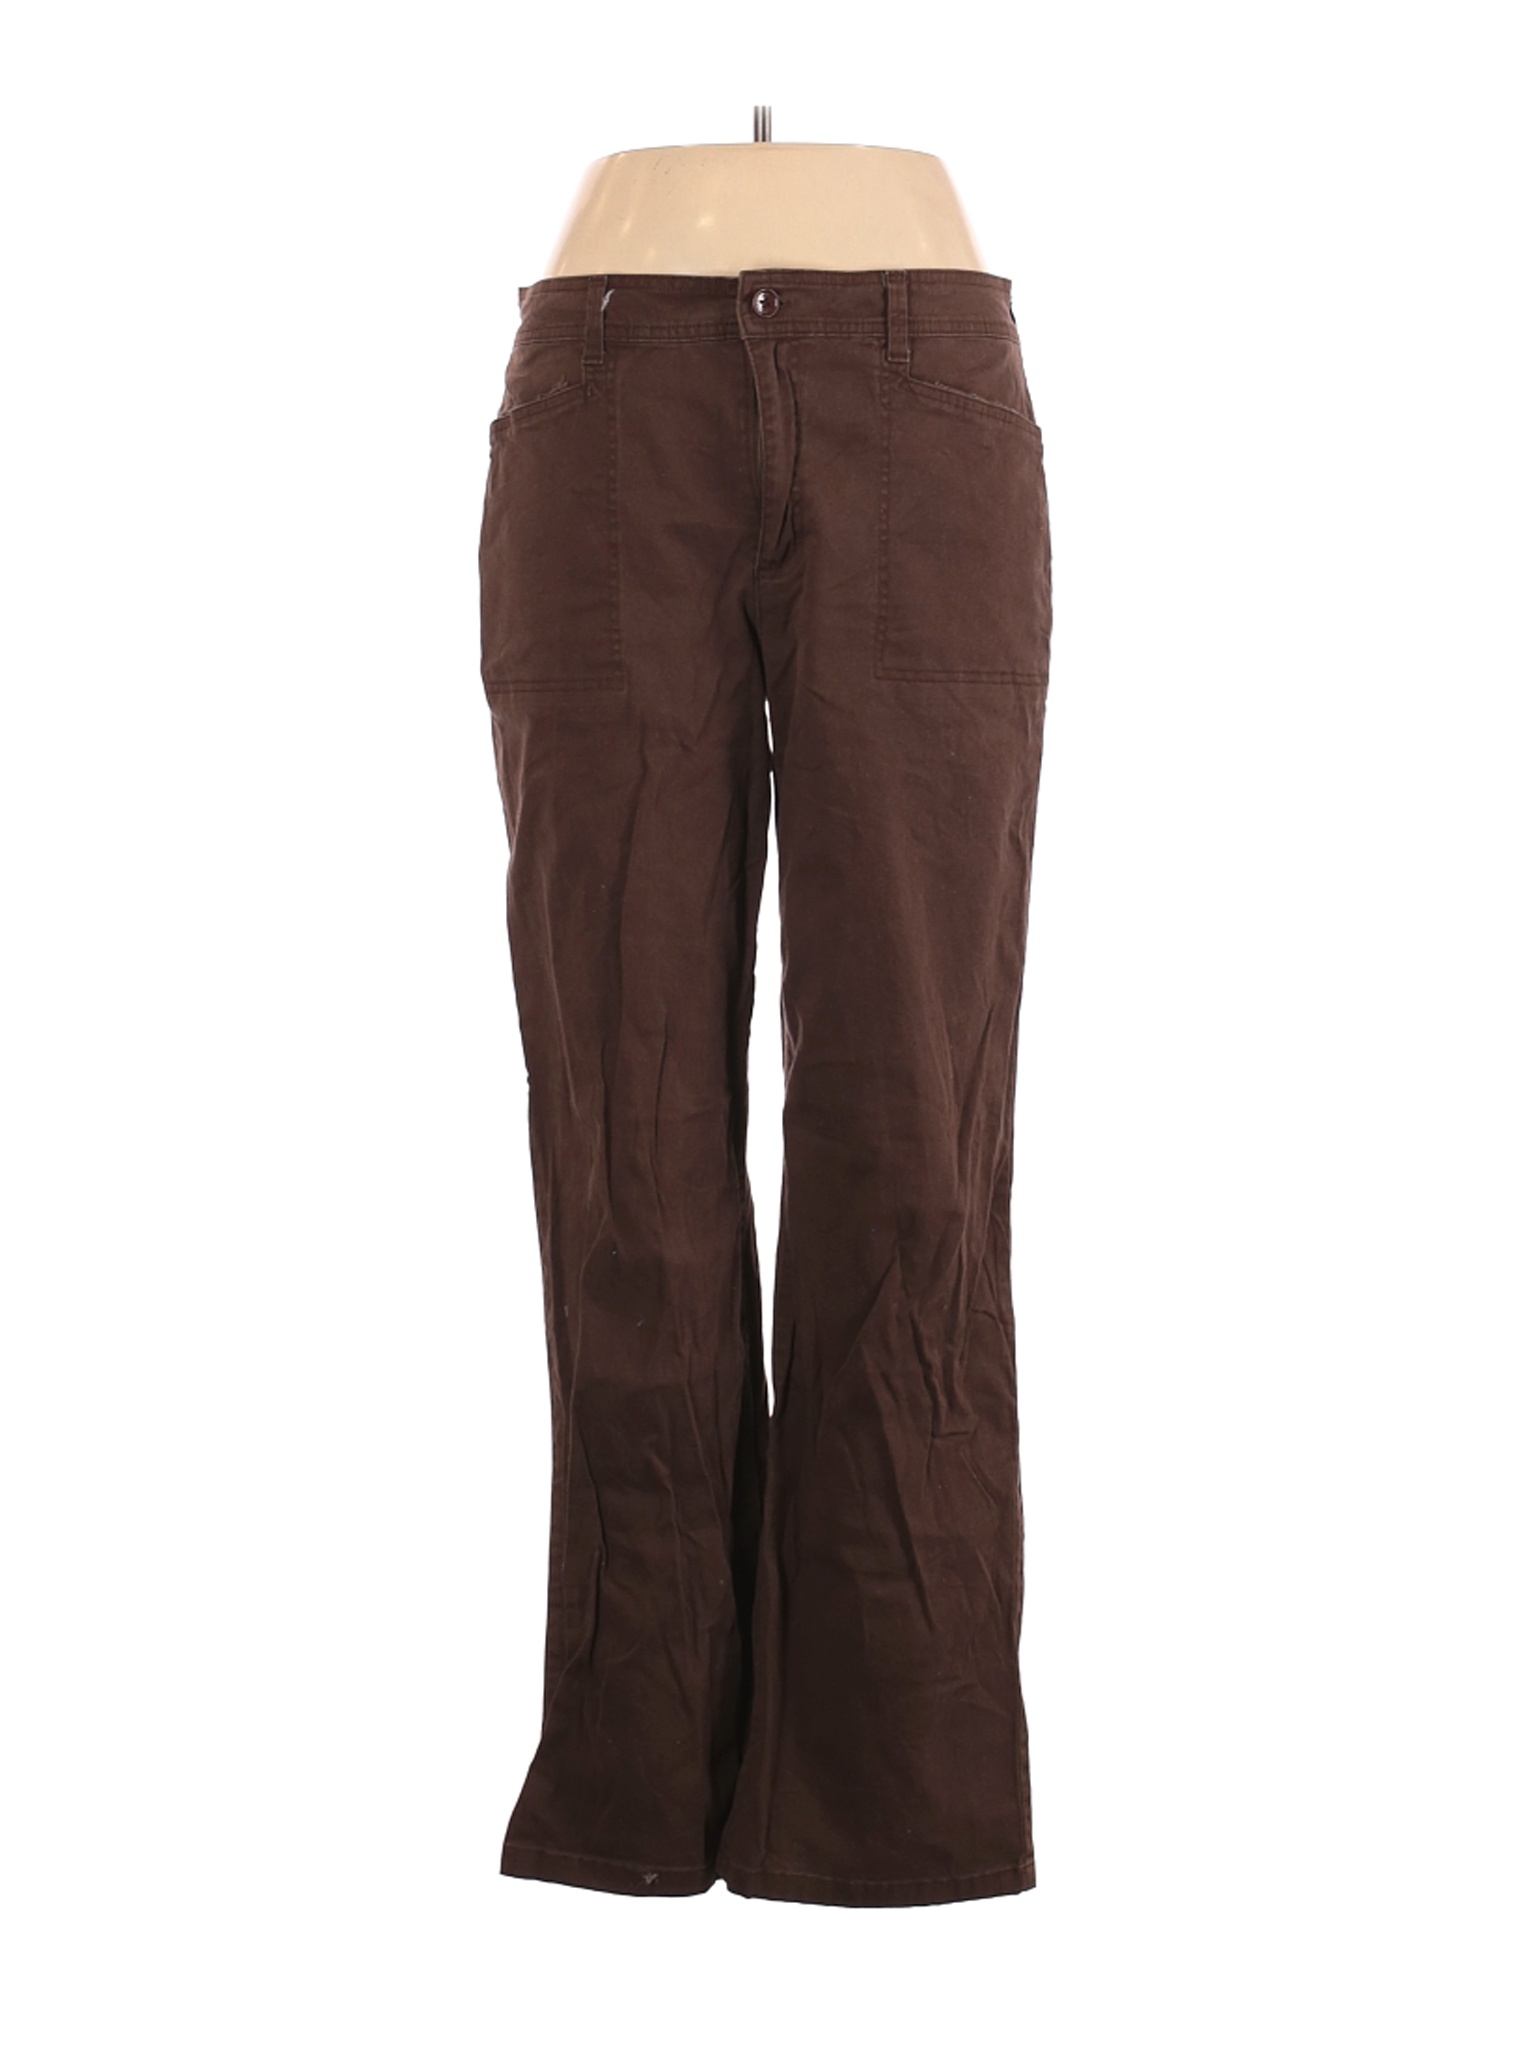 Gloria Vanderbilt Women Brown Casual Pants 14 | eBay